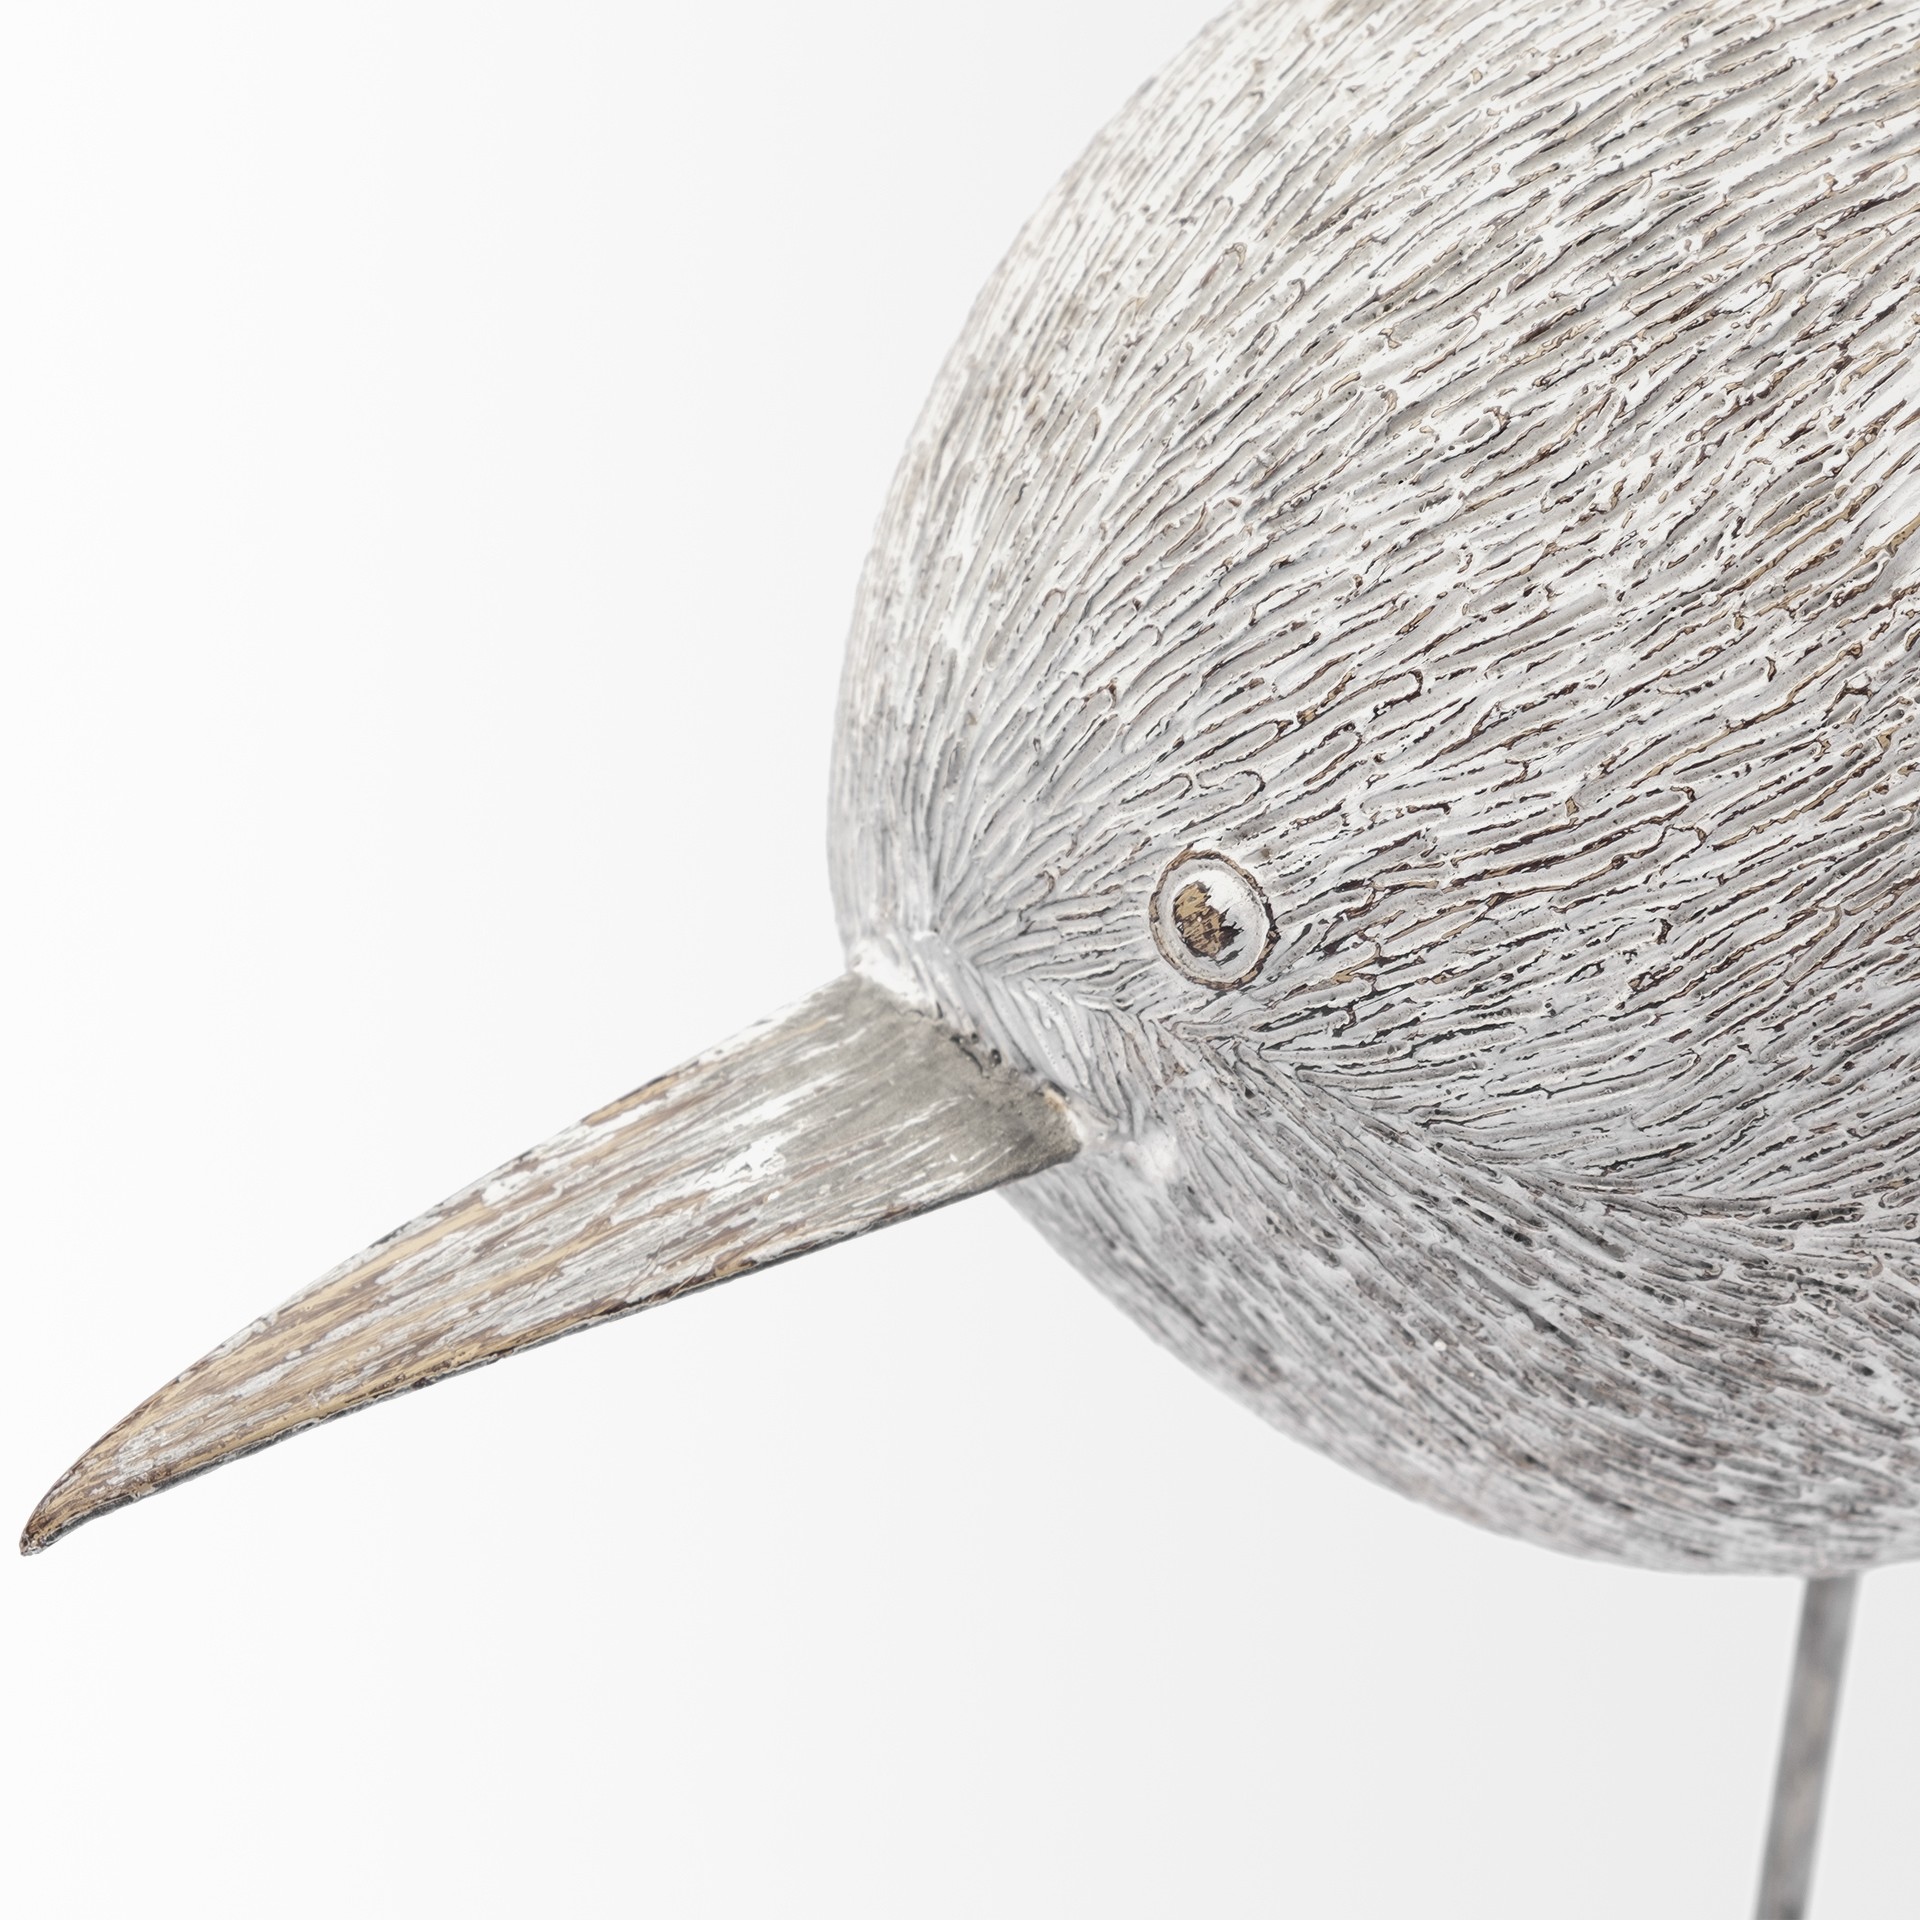 Off White Resin Bird Sculpture